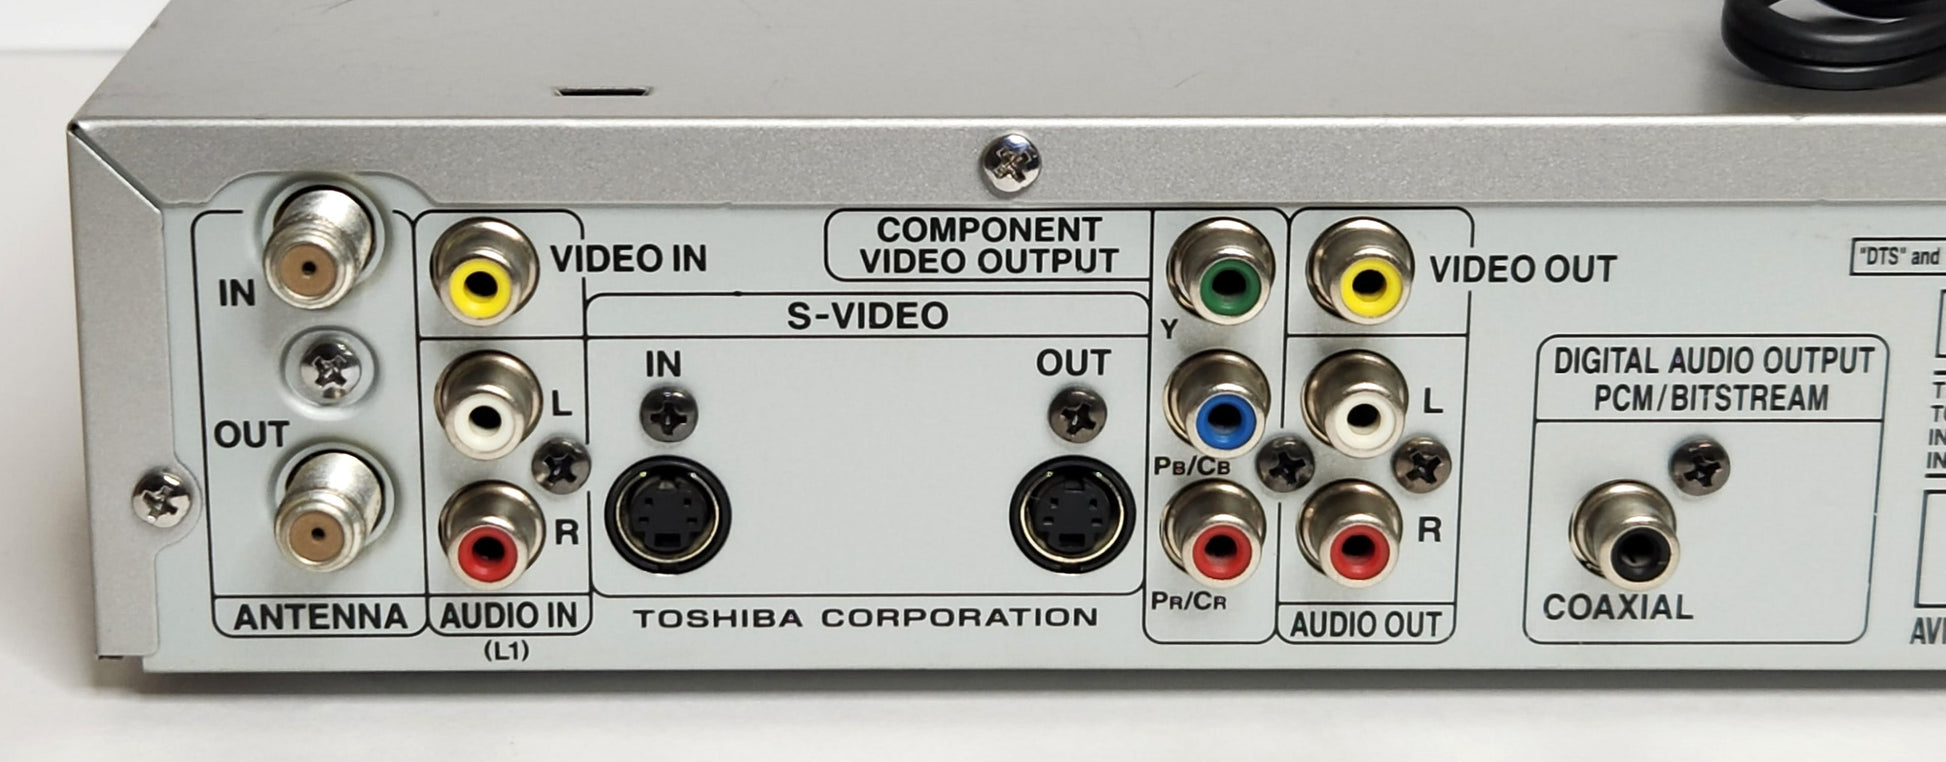 Toshiba D-RW2SU DVD Recorder - Connections